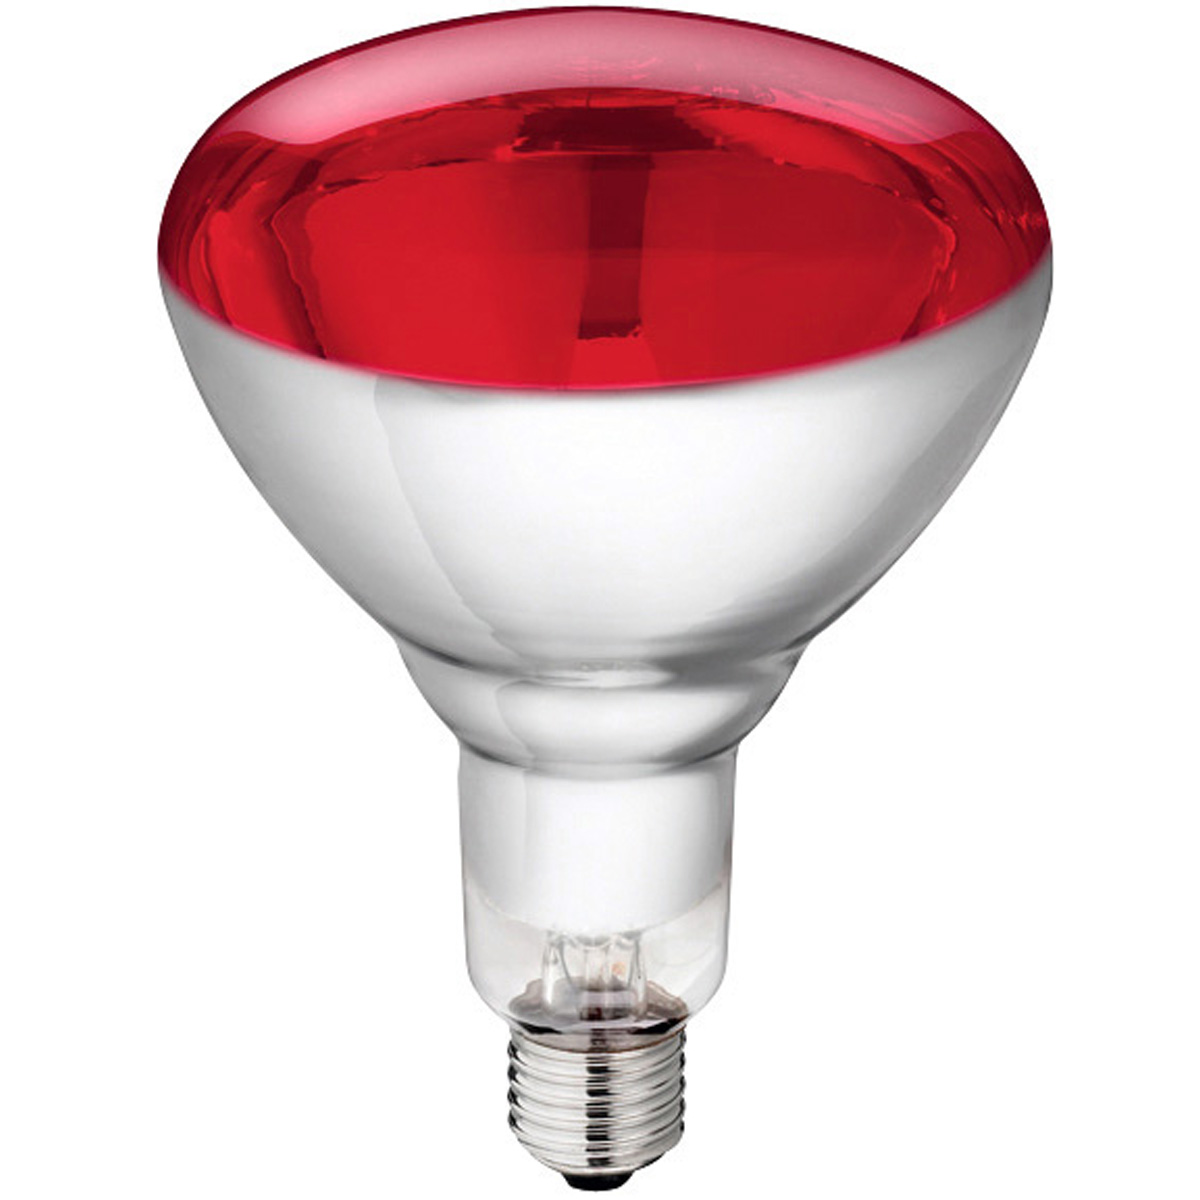 Philips Hartglaslampe rot 150 W